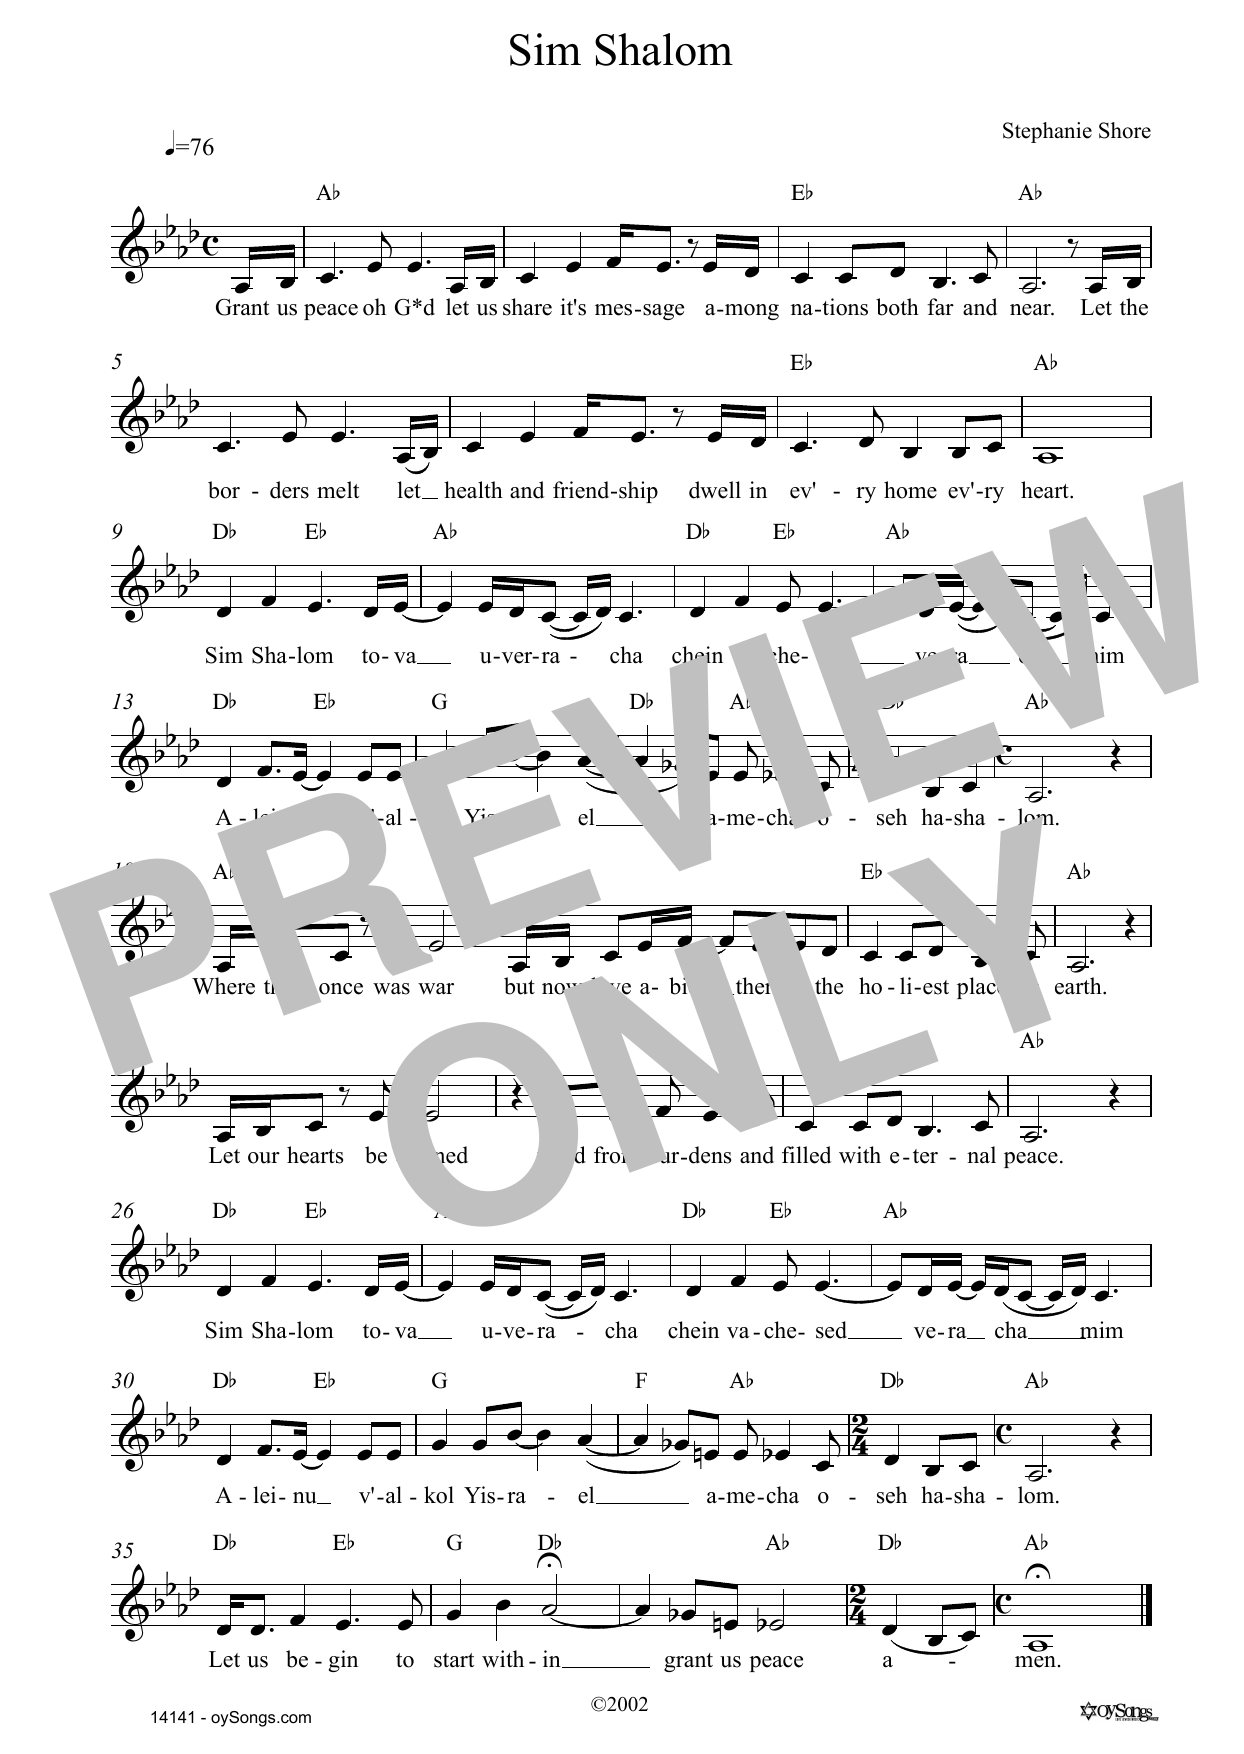 Stephanie Shore Sim Shalom Sheet Music Notes & Chords for Lead Sheet / Fake Book - Download or Print PDF